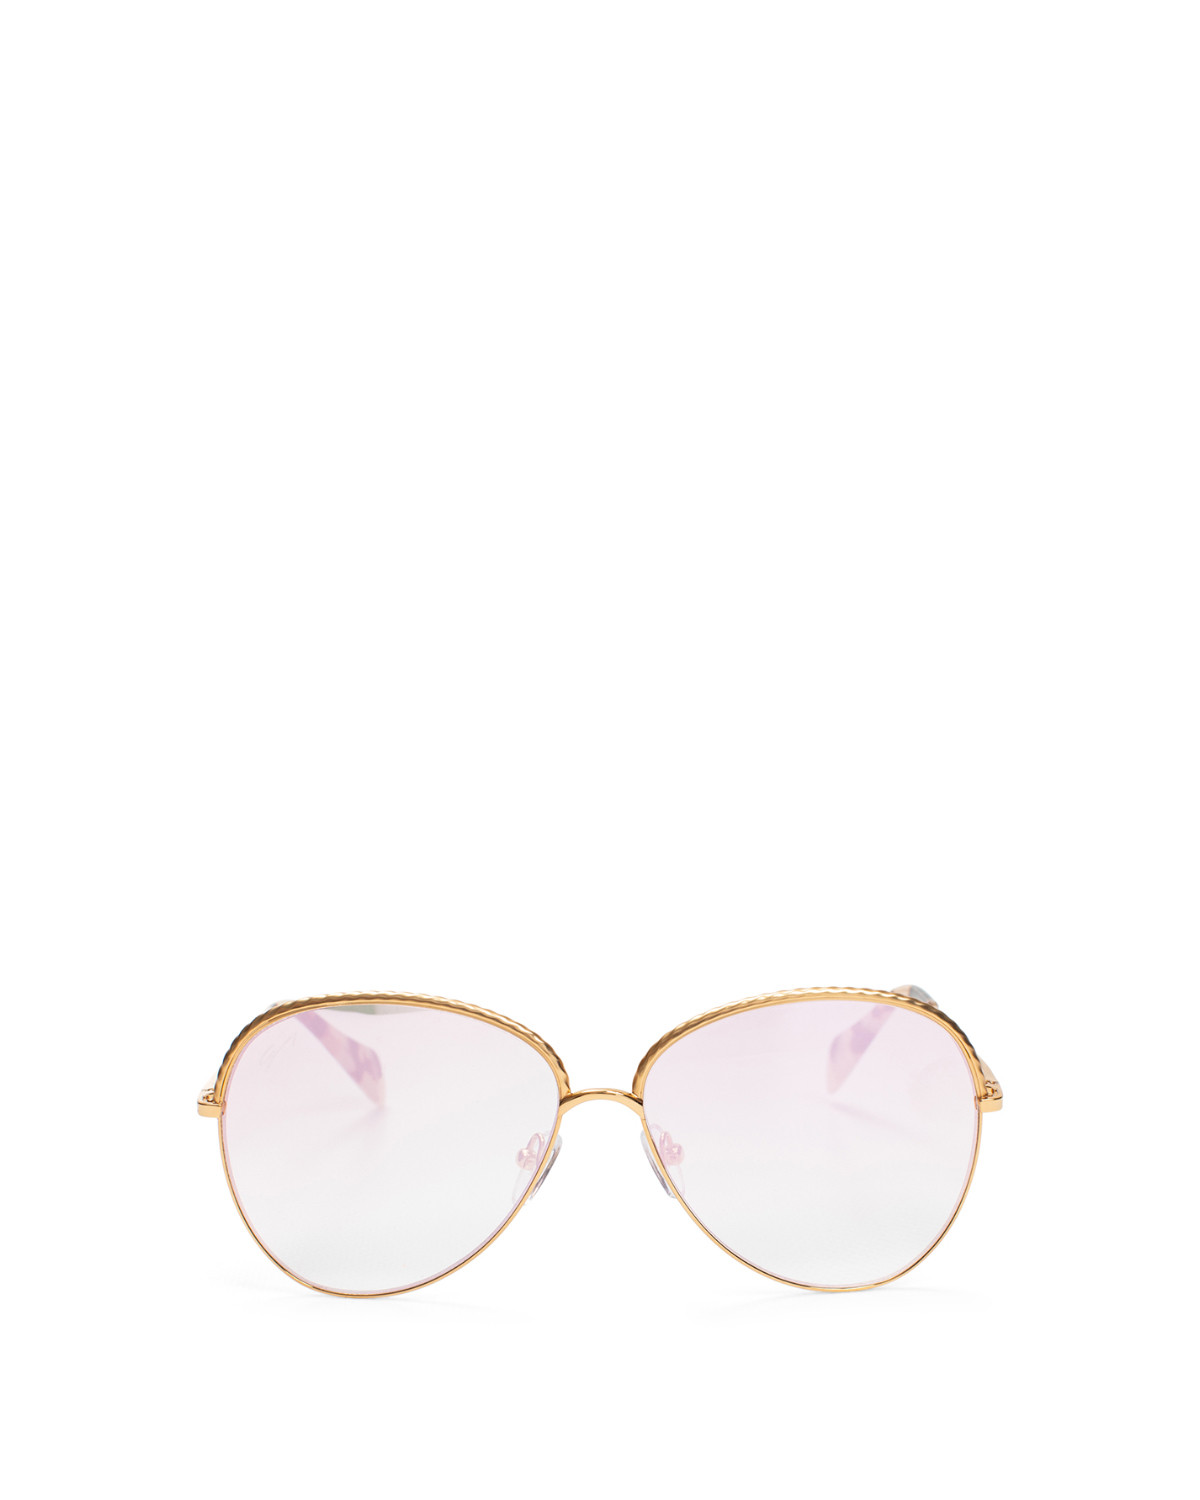 Braided gold round-frame sunglasses